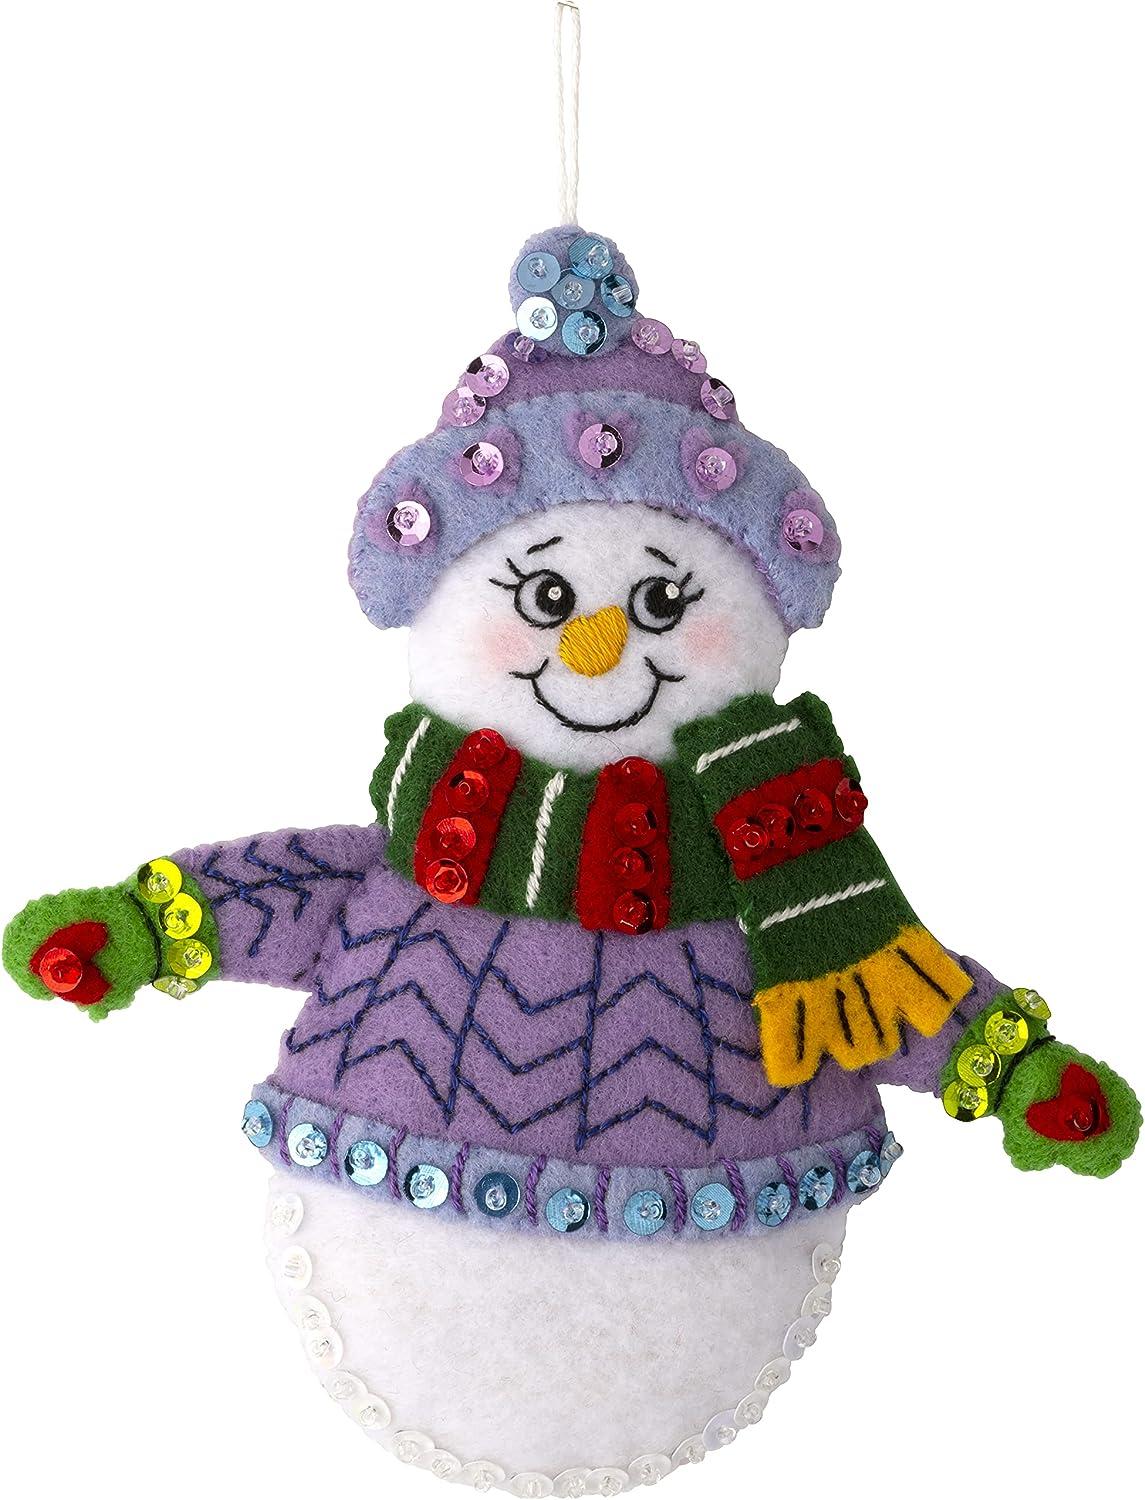 Felt Ornaments Applique Kit - Winter Wonderland